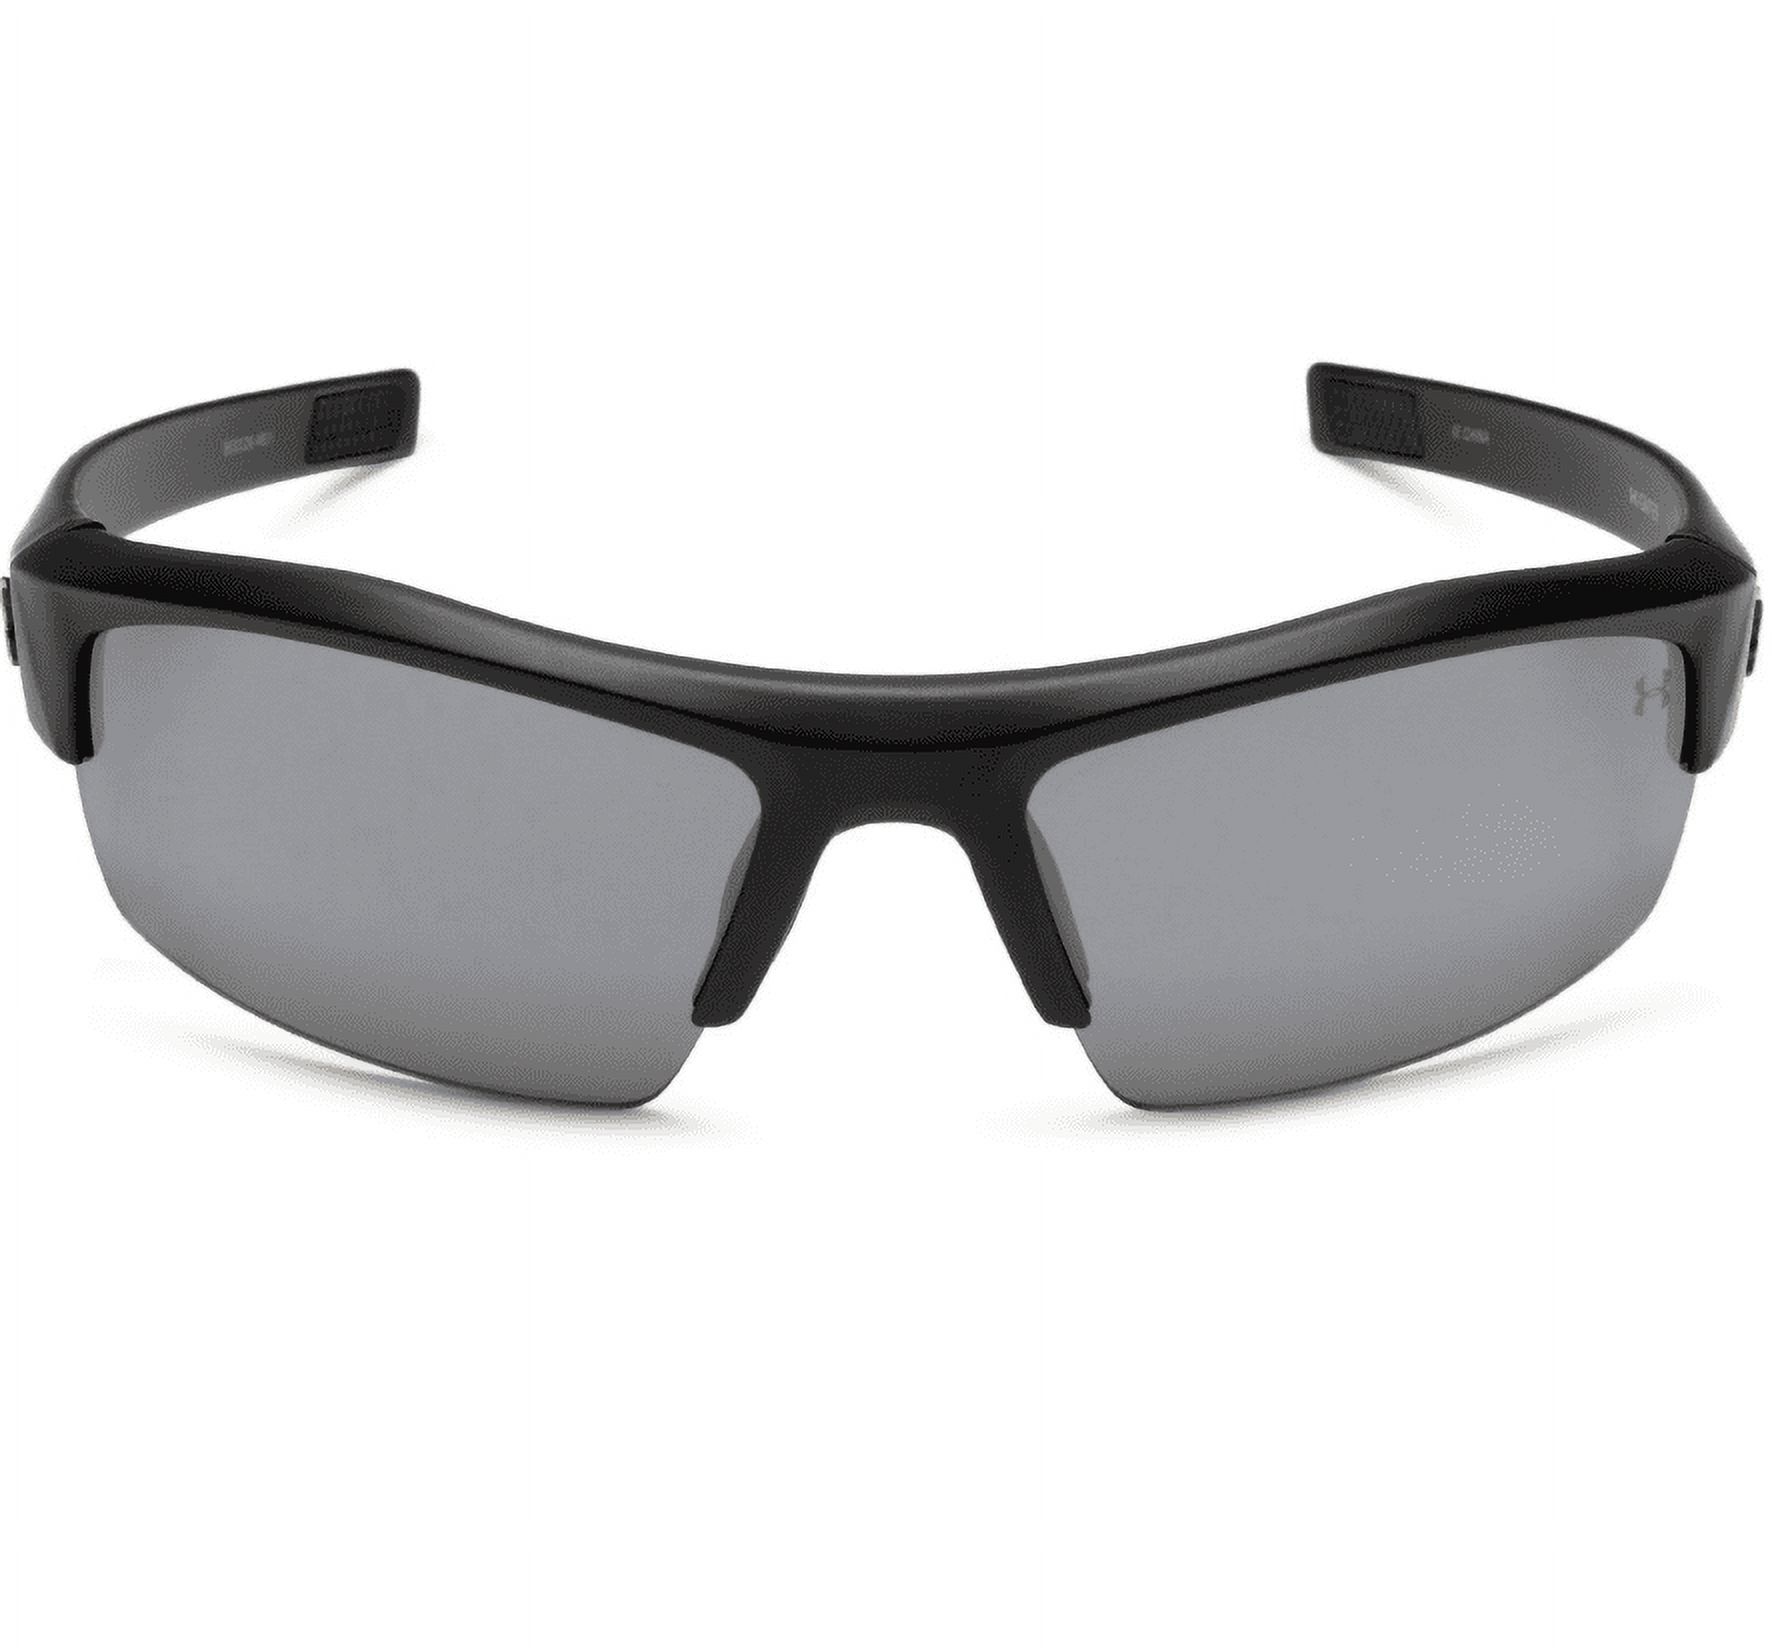 Under Armour UA Igniter Satin Black Frame Gray Mirror Lens Men's Sport Sunglasses - image 2 of 4